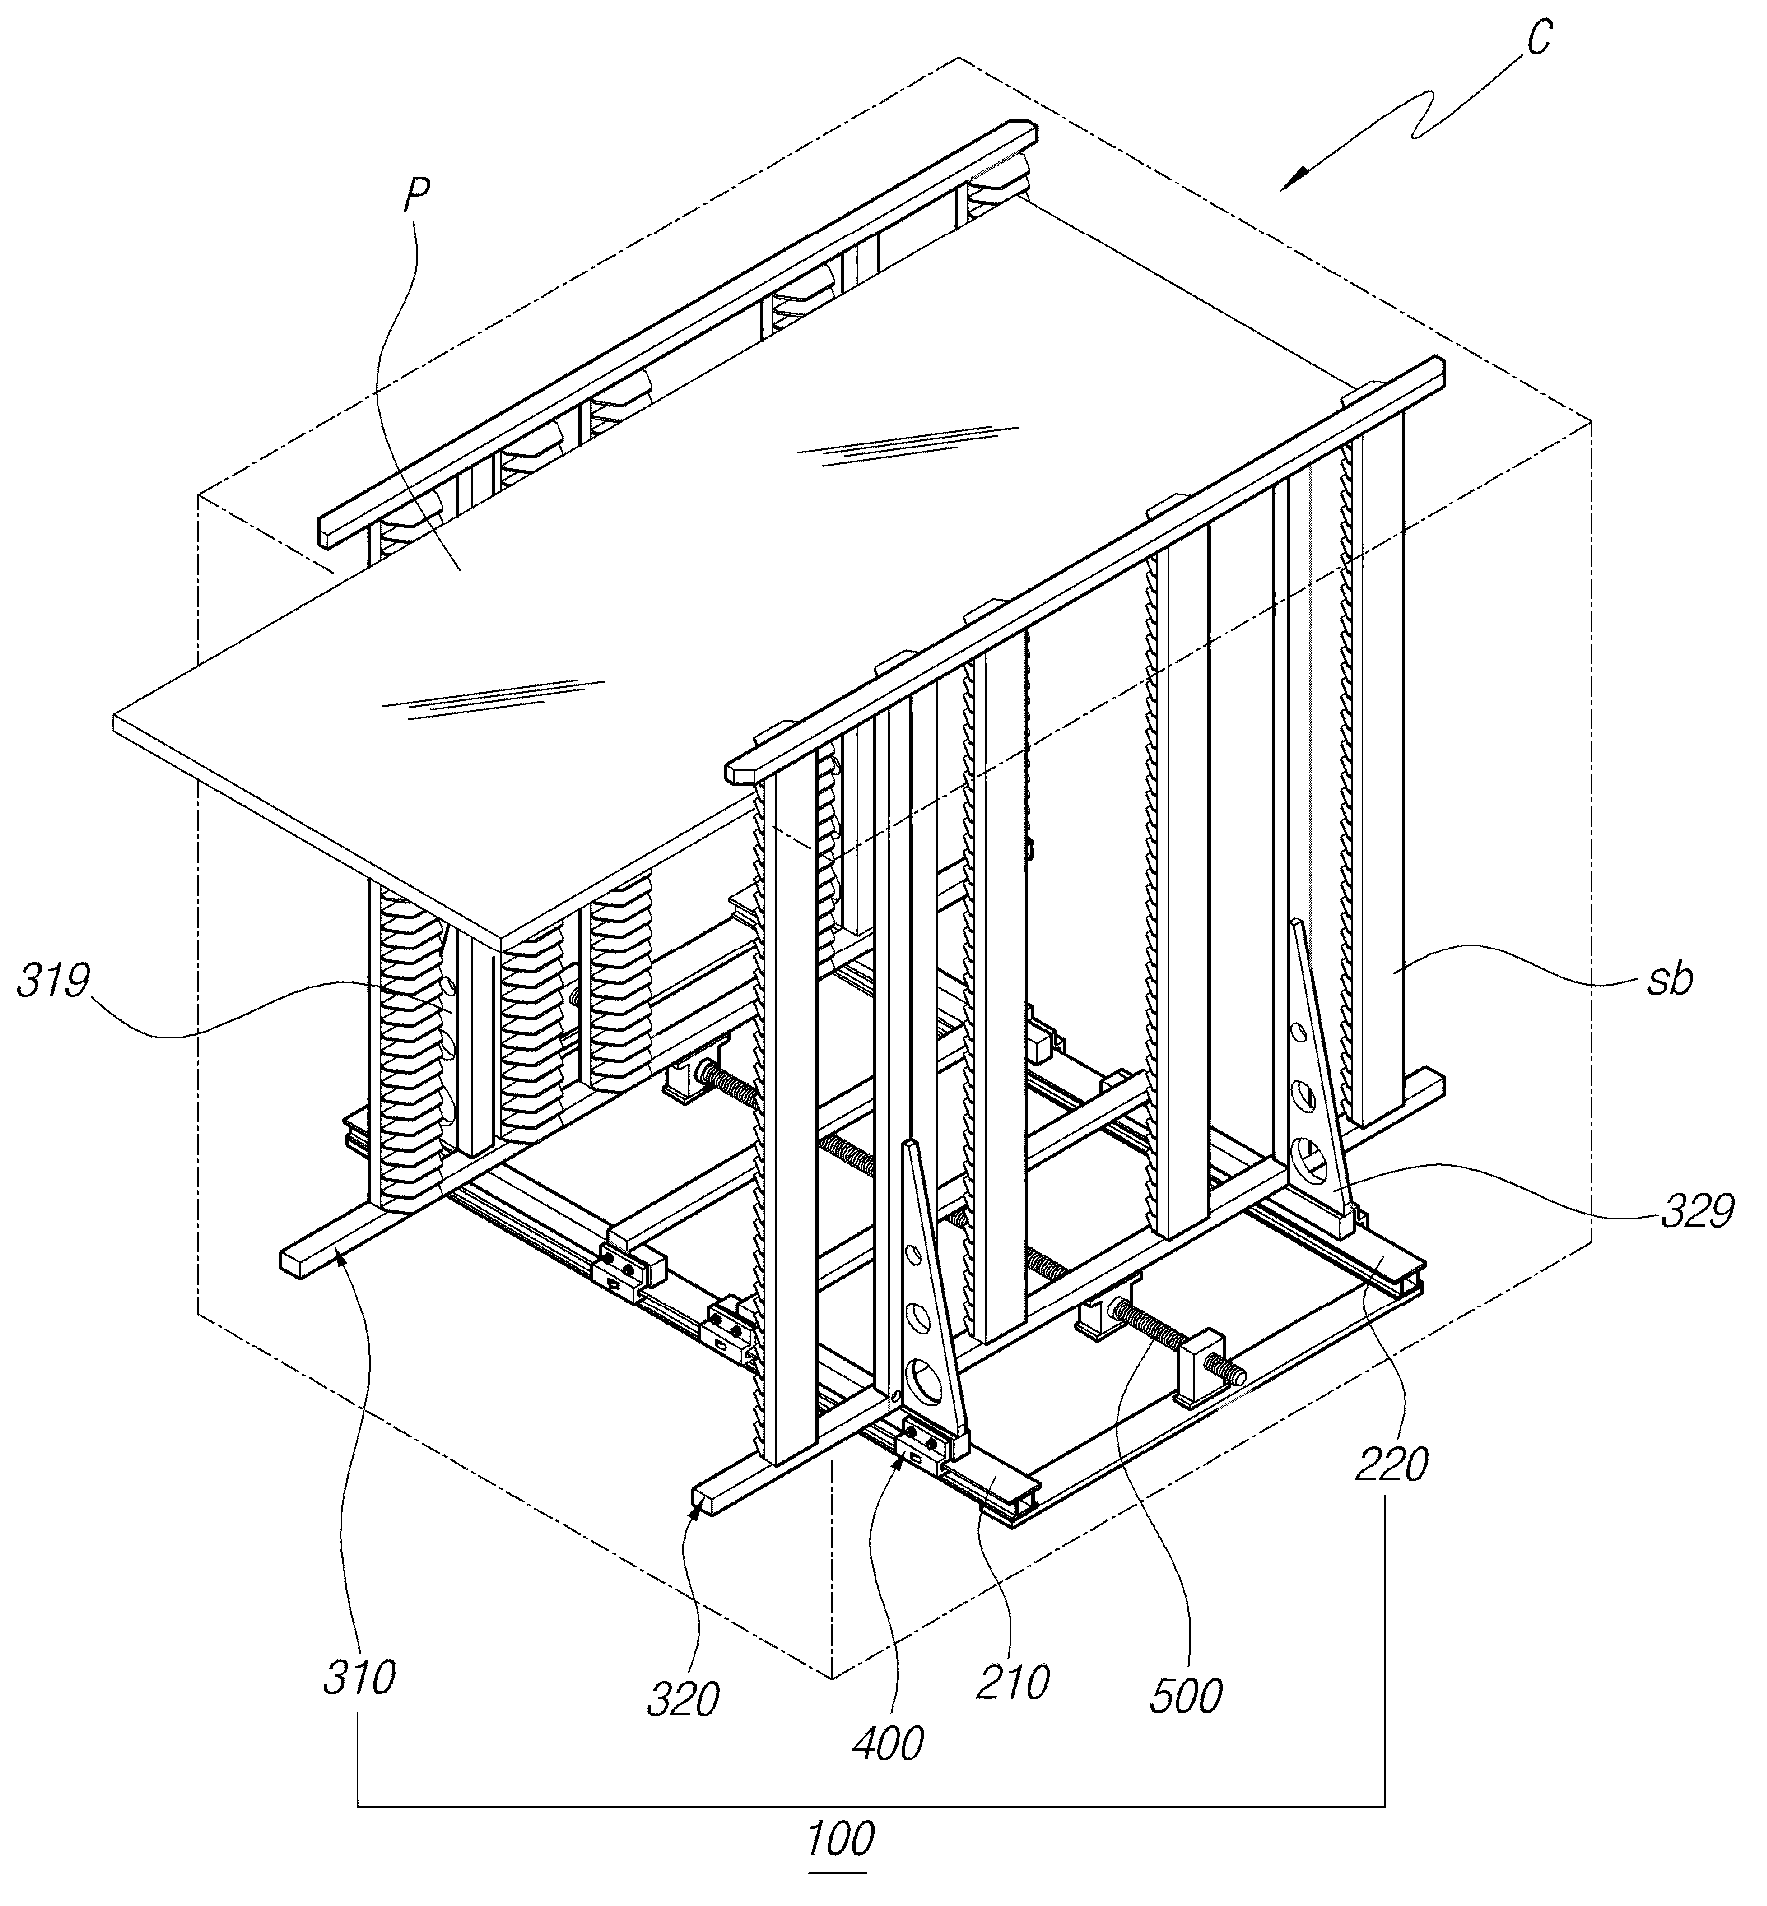 Glass substrate loading cassette for adjusting interval between slot bars